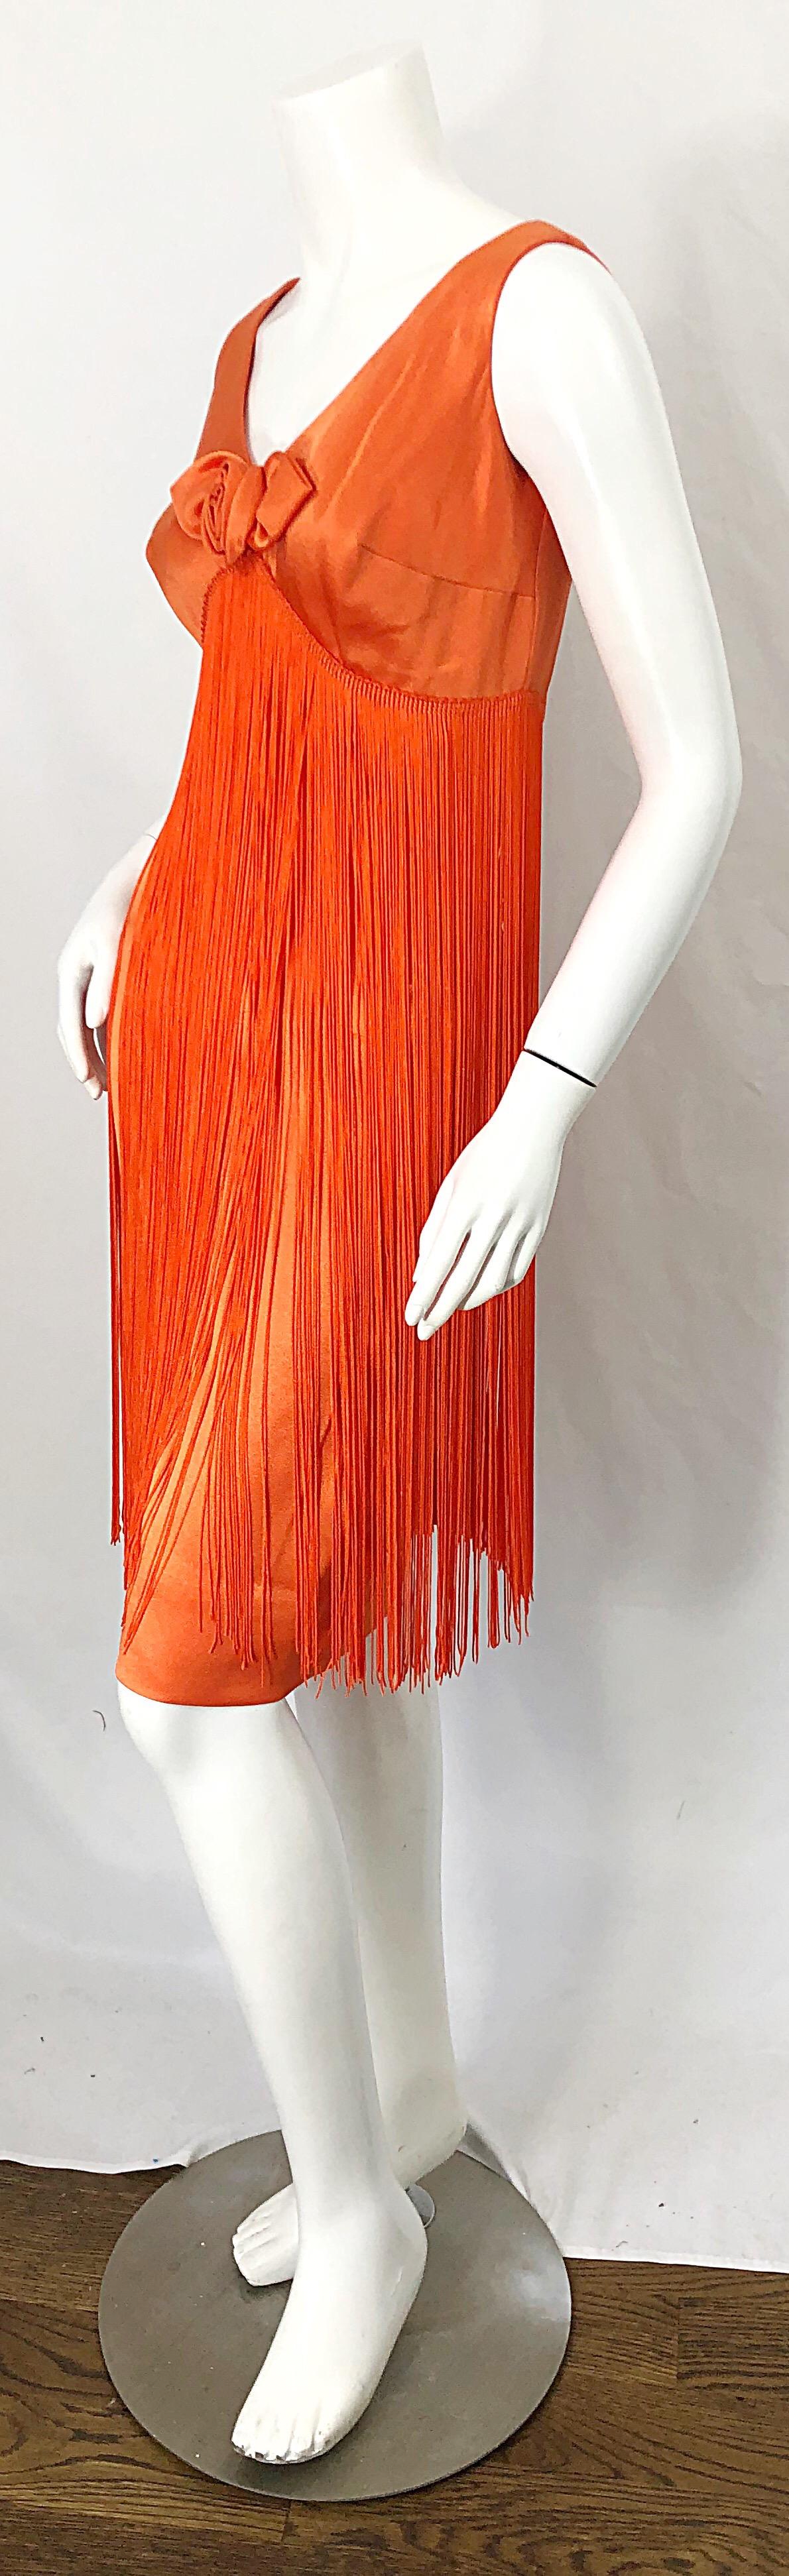 1960s Joseph Magnin Neon Orange Fully Fringed Vintage 60s Flapper Dress For Sale 1